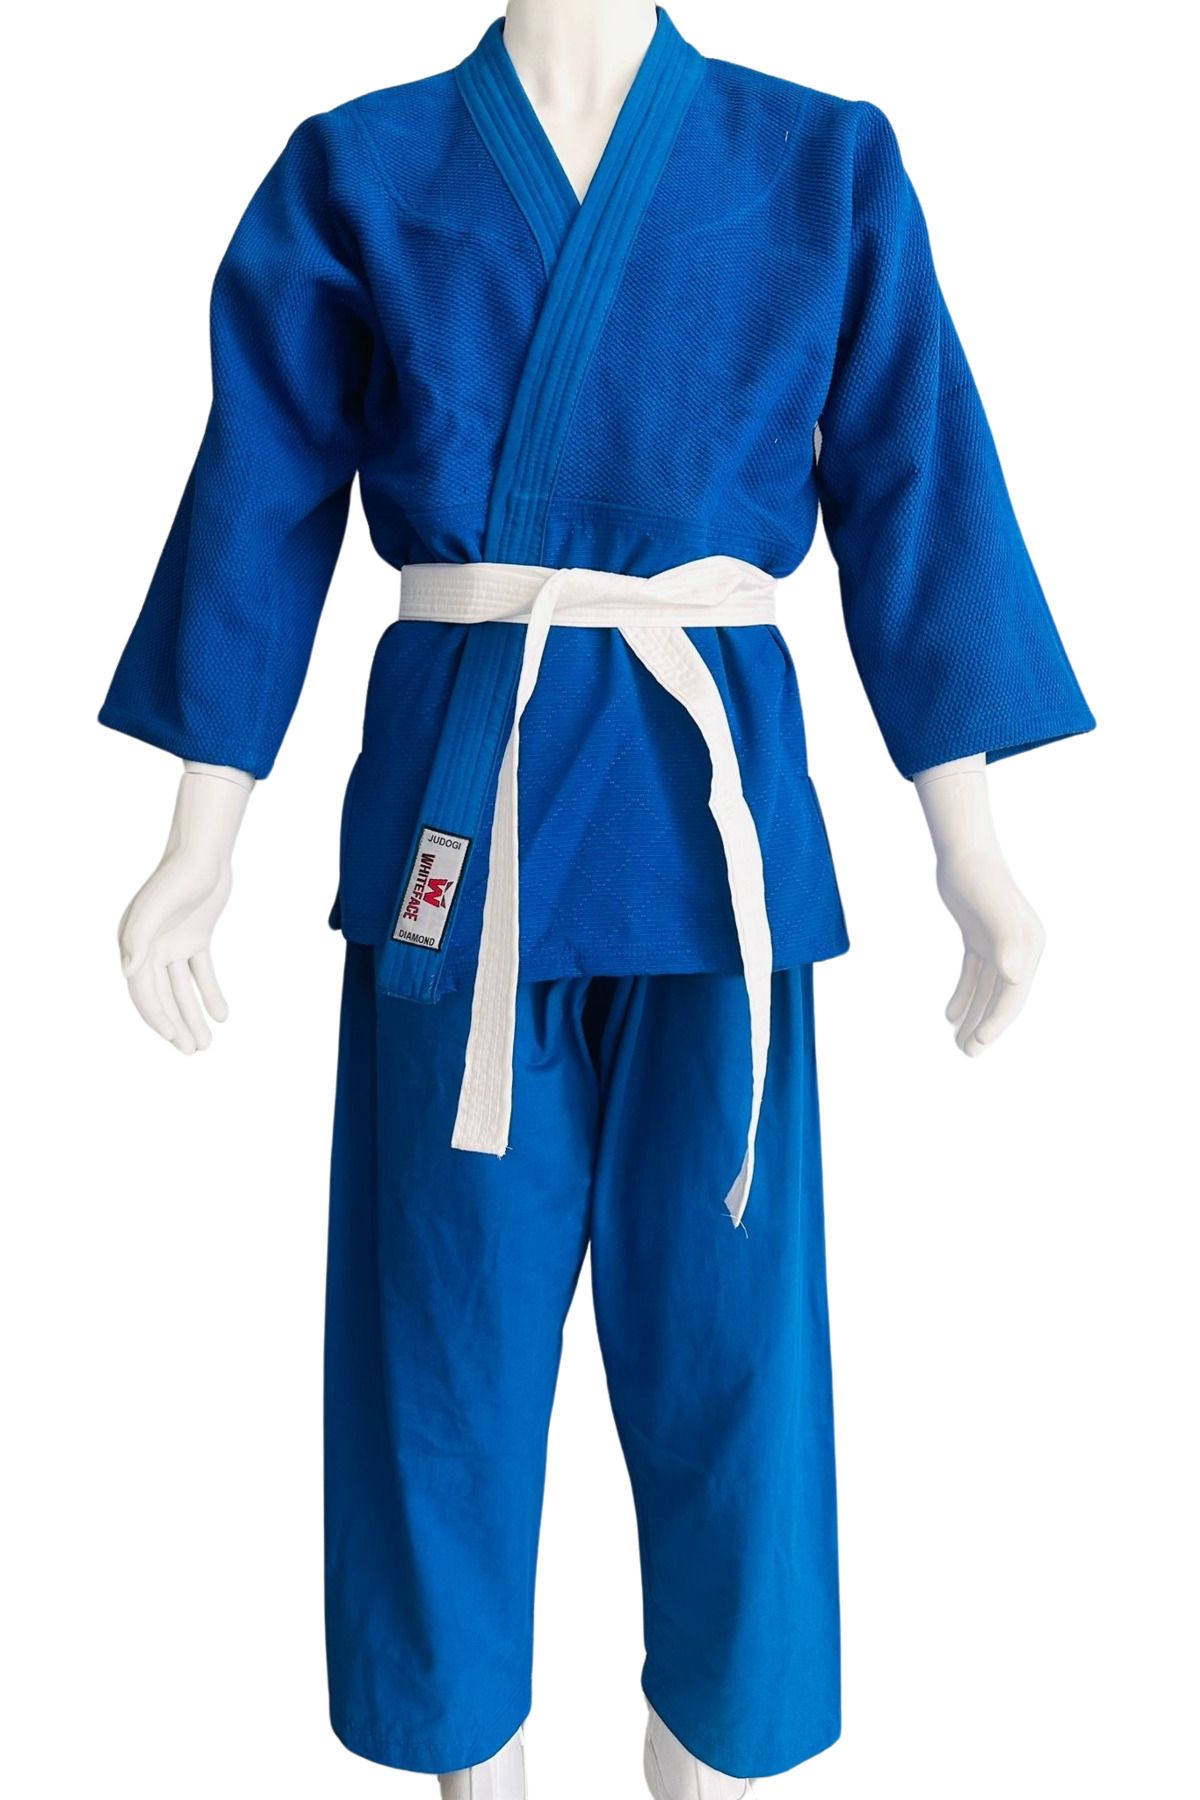 whiteface Diamond Judo Elbisesi (Judogi) mavi